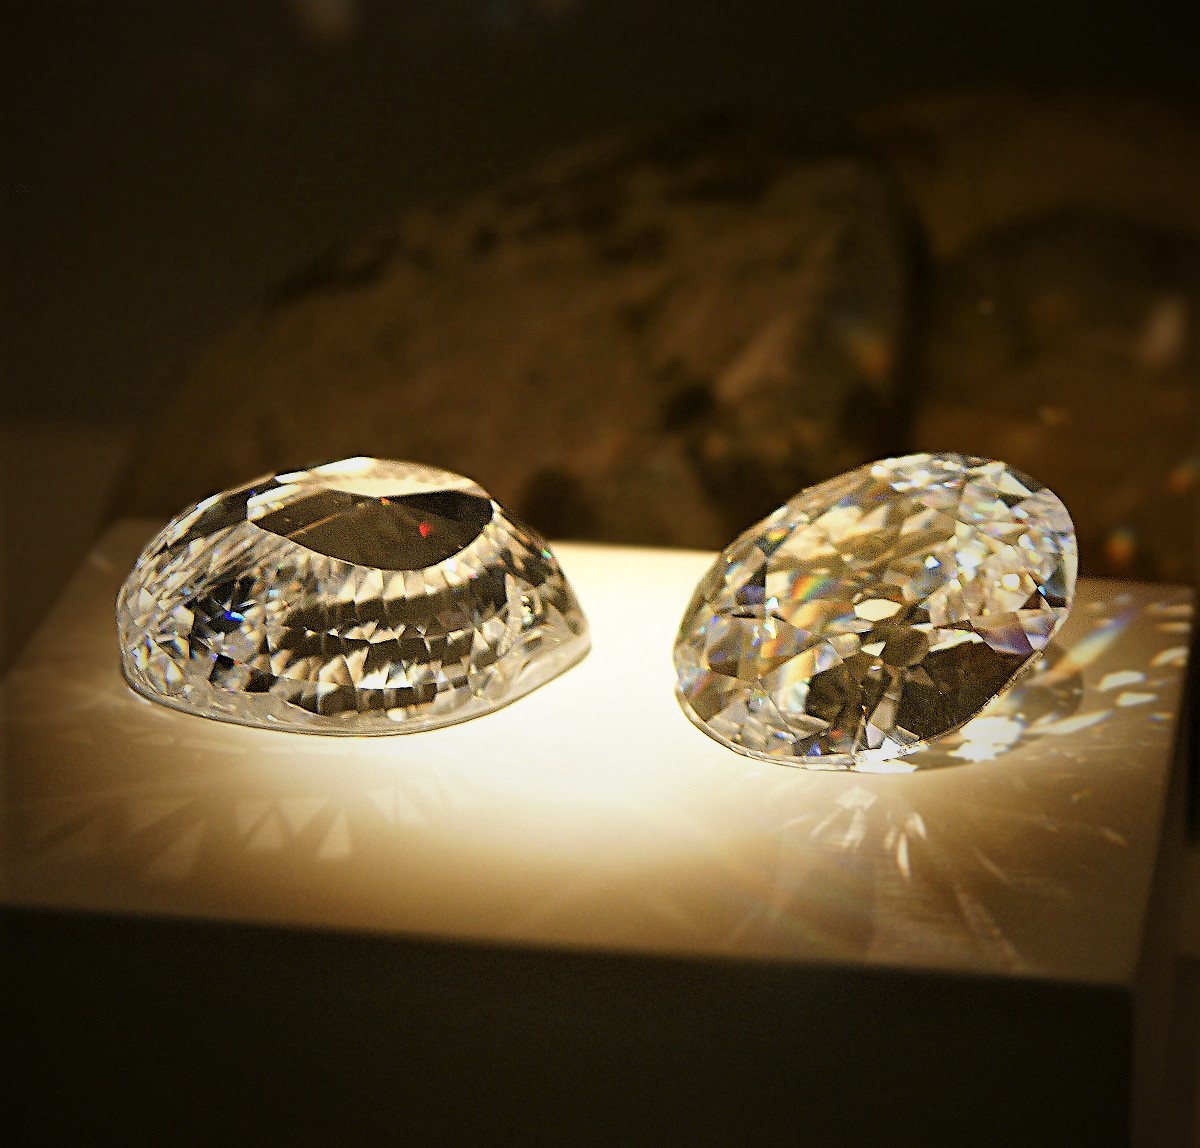 The Koh-i-Noor Diamond 'mountain of light'. Credit Ji Ruan, flickr